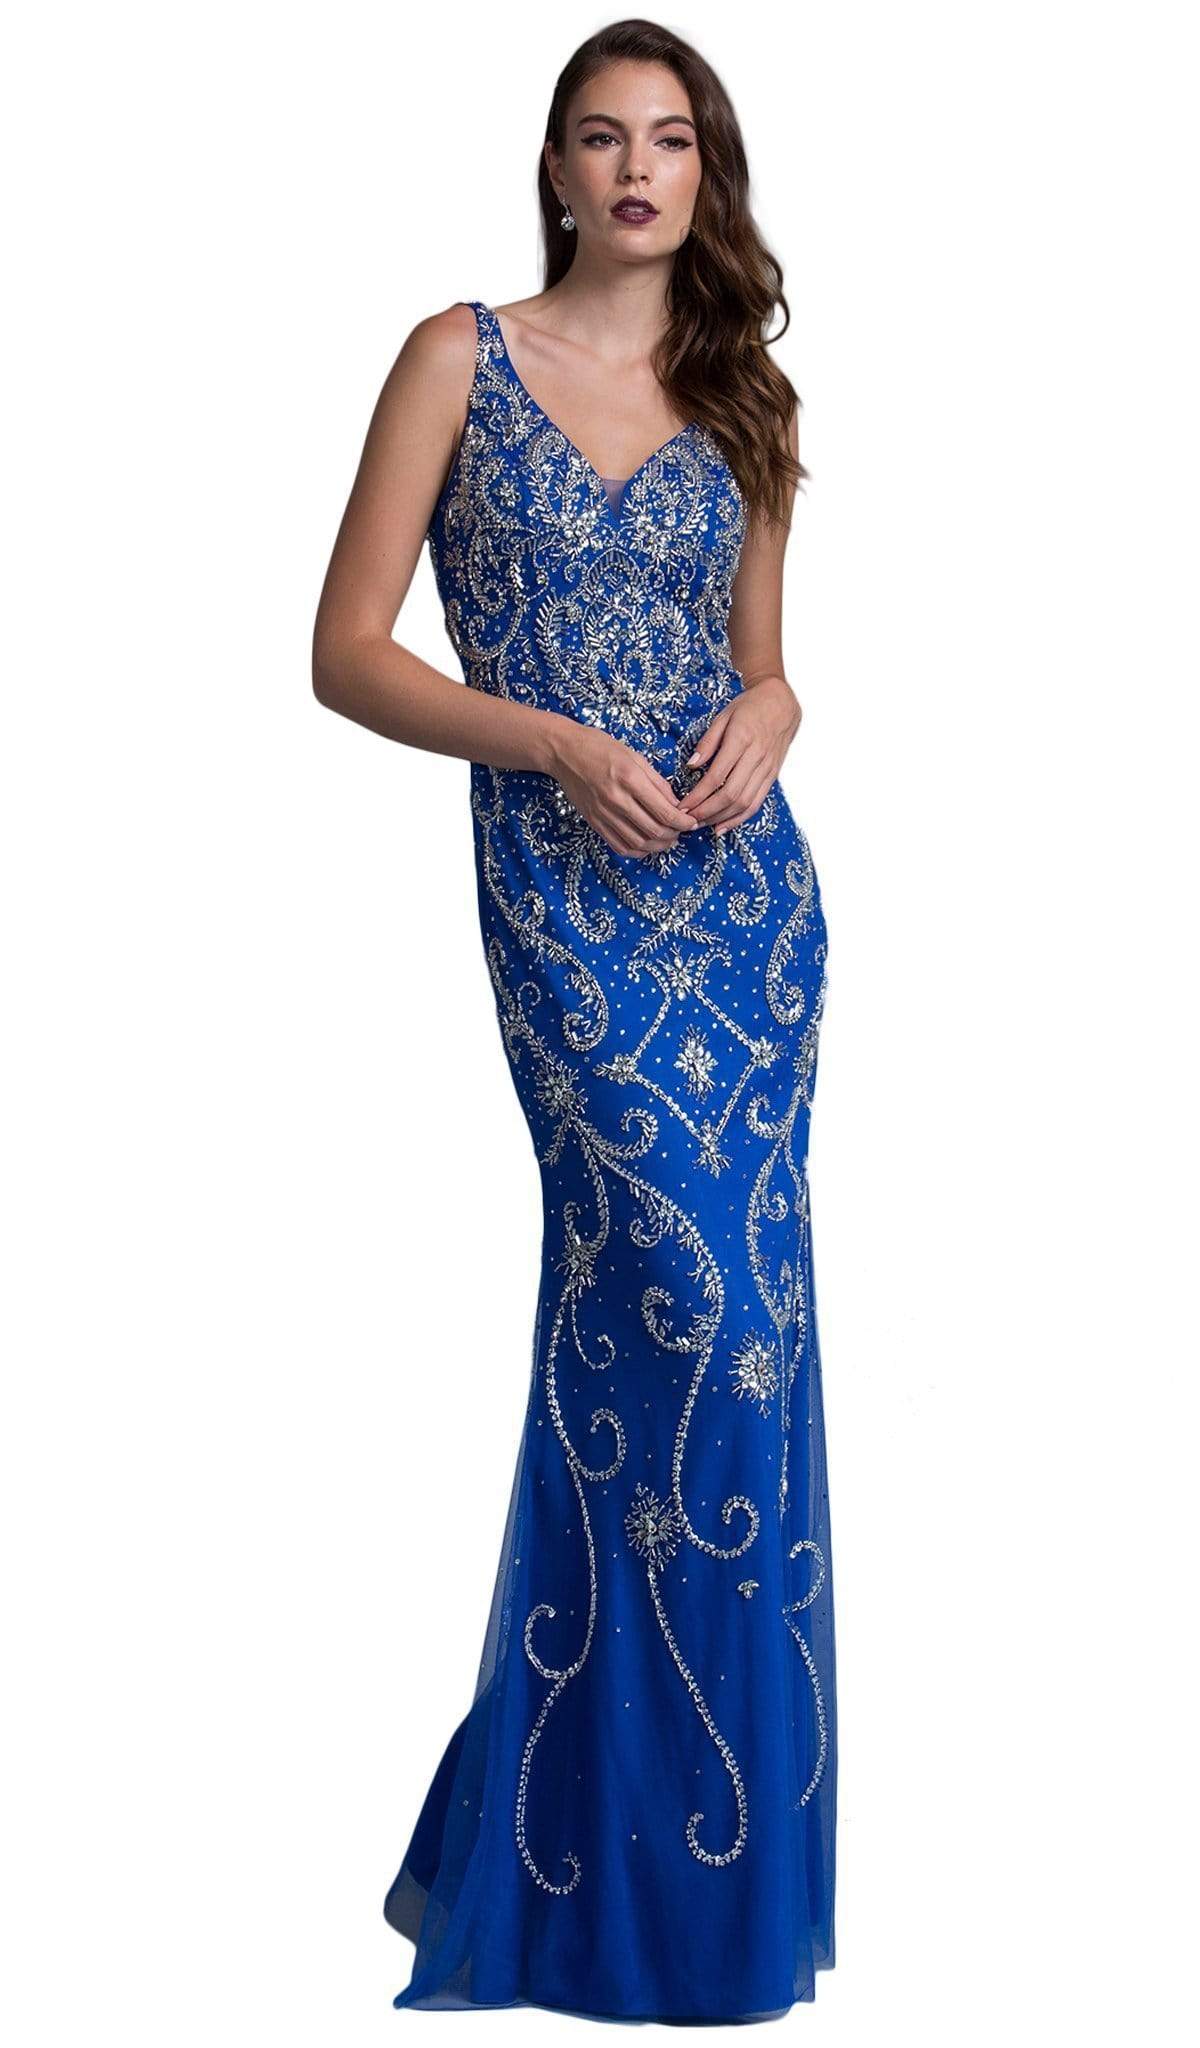 Aspeed Design - Ornate V-neck Fitted Evening Dress
